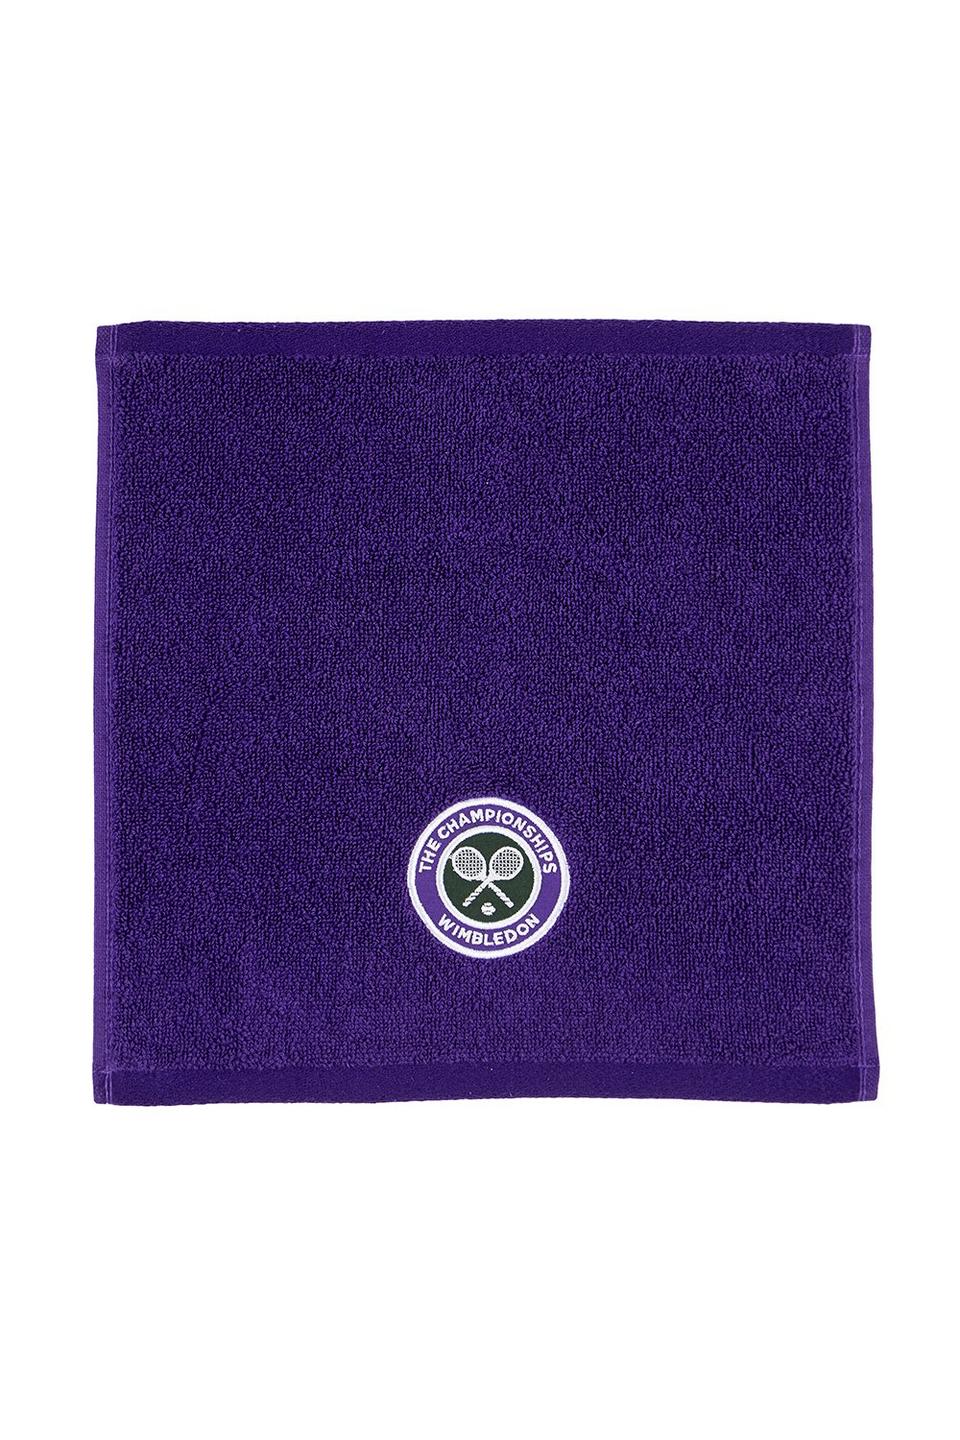 Towels | 'Wimbledon' Face Cloth Pack | CHRISTY